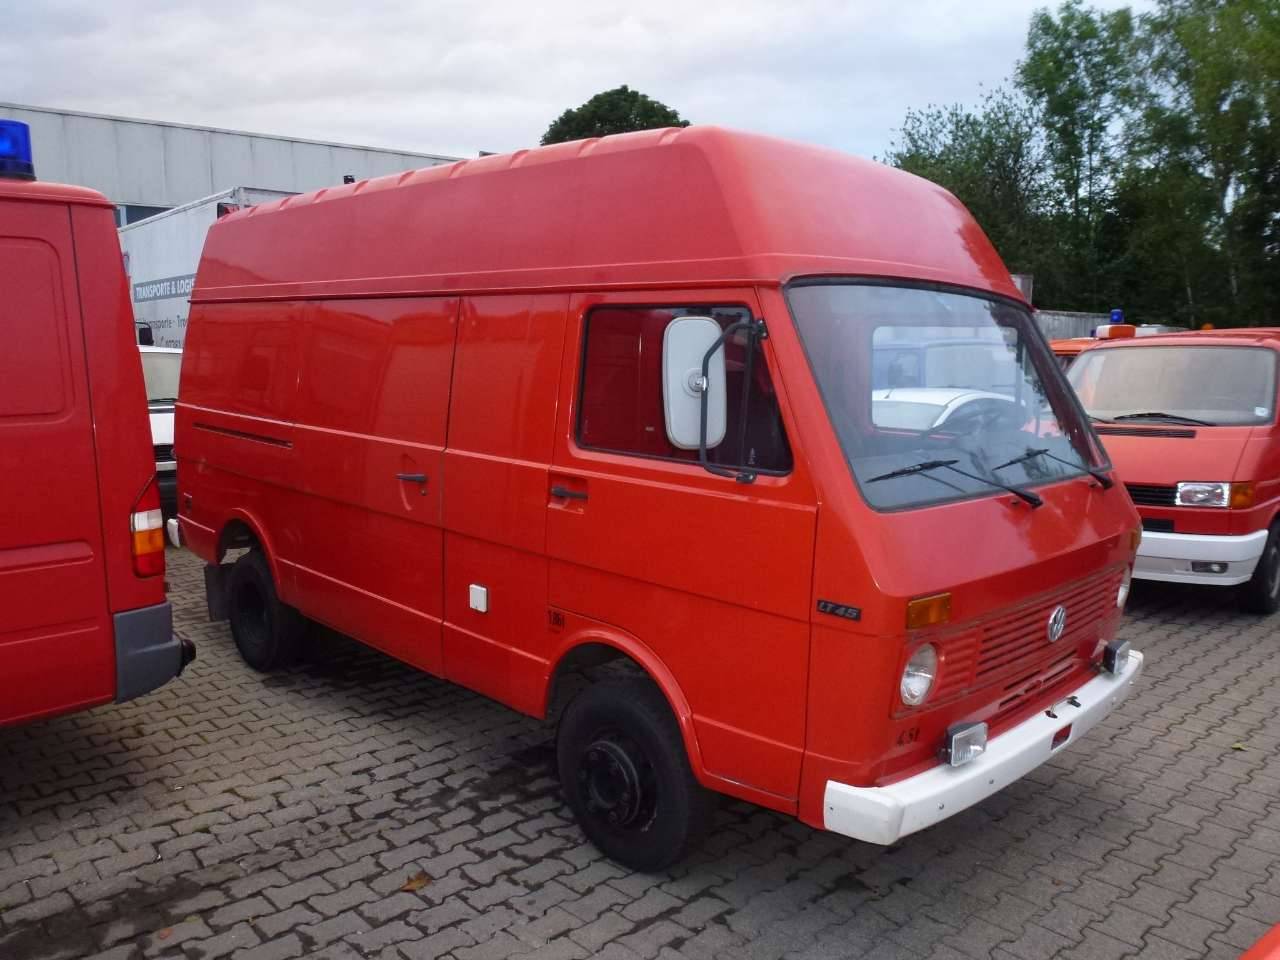 For Sale Volkswagen LT 35 (1980) offered for AUD 32,105